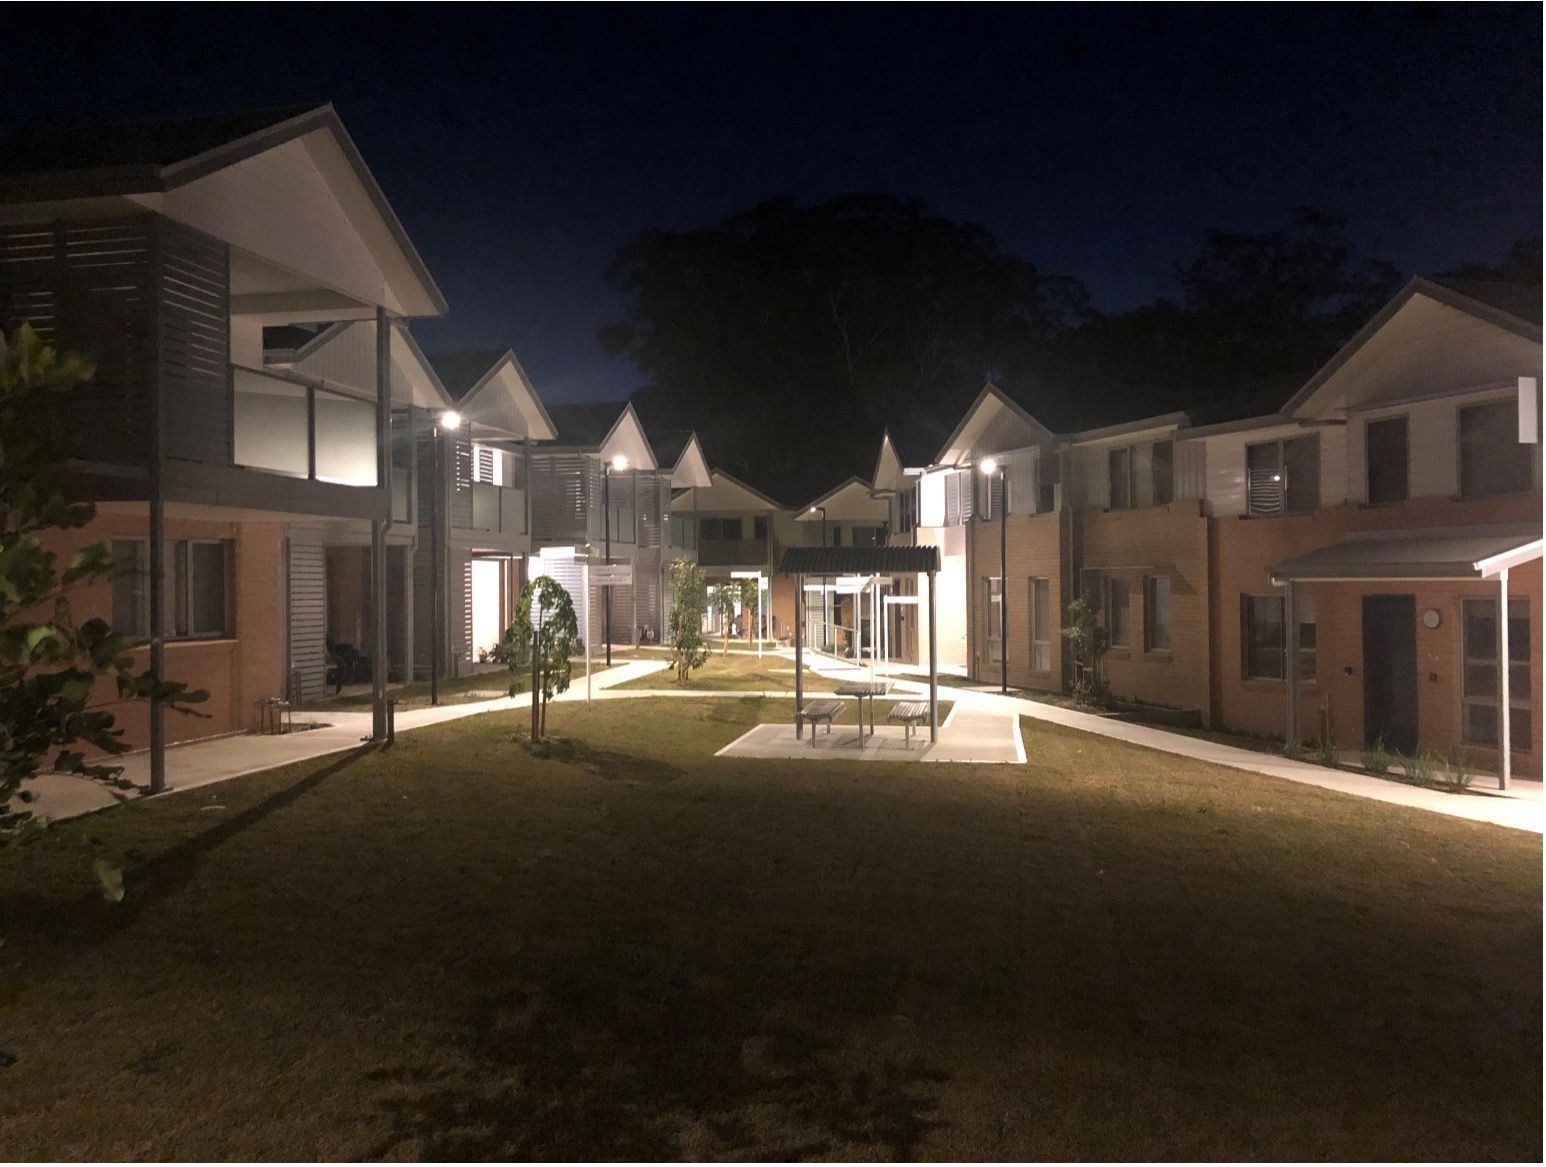 BaptistCare housing at night